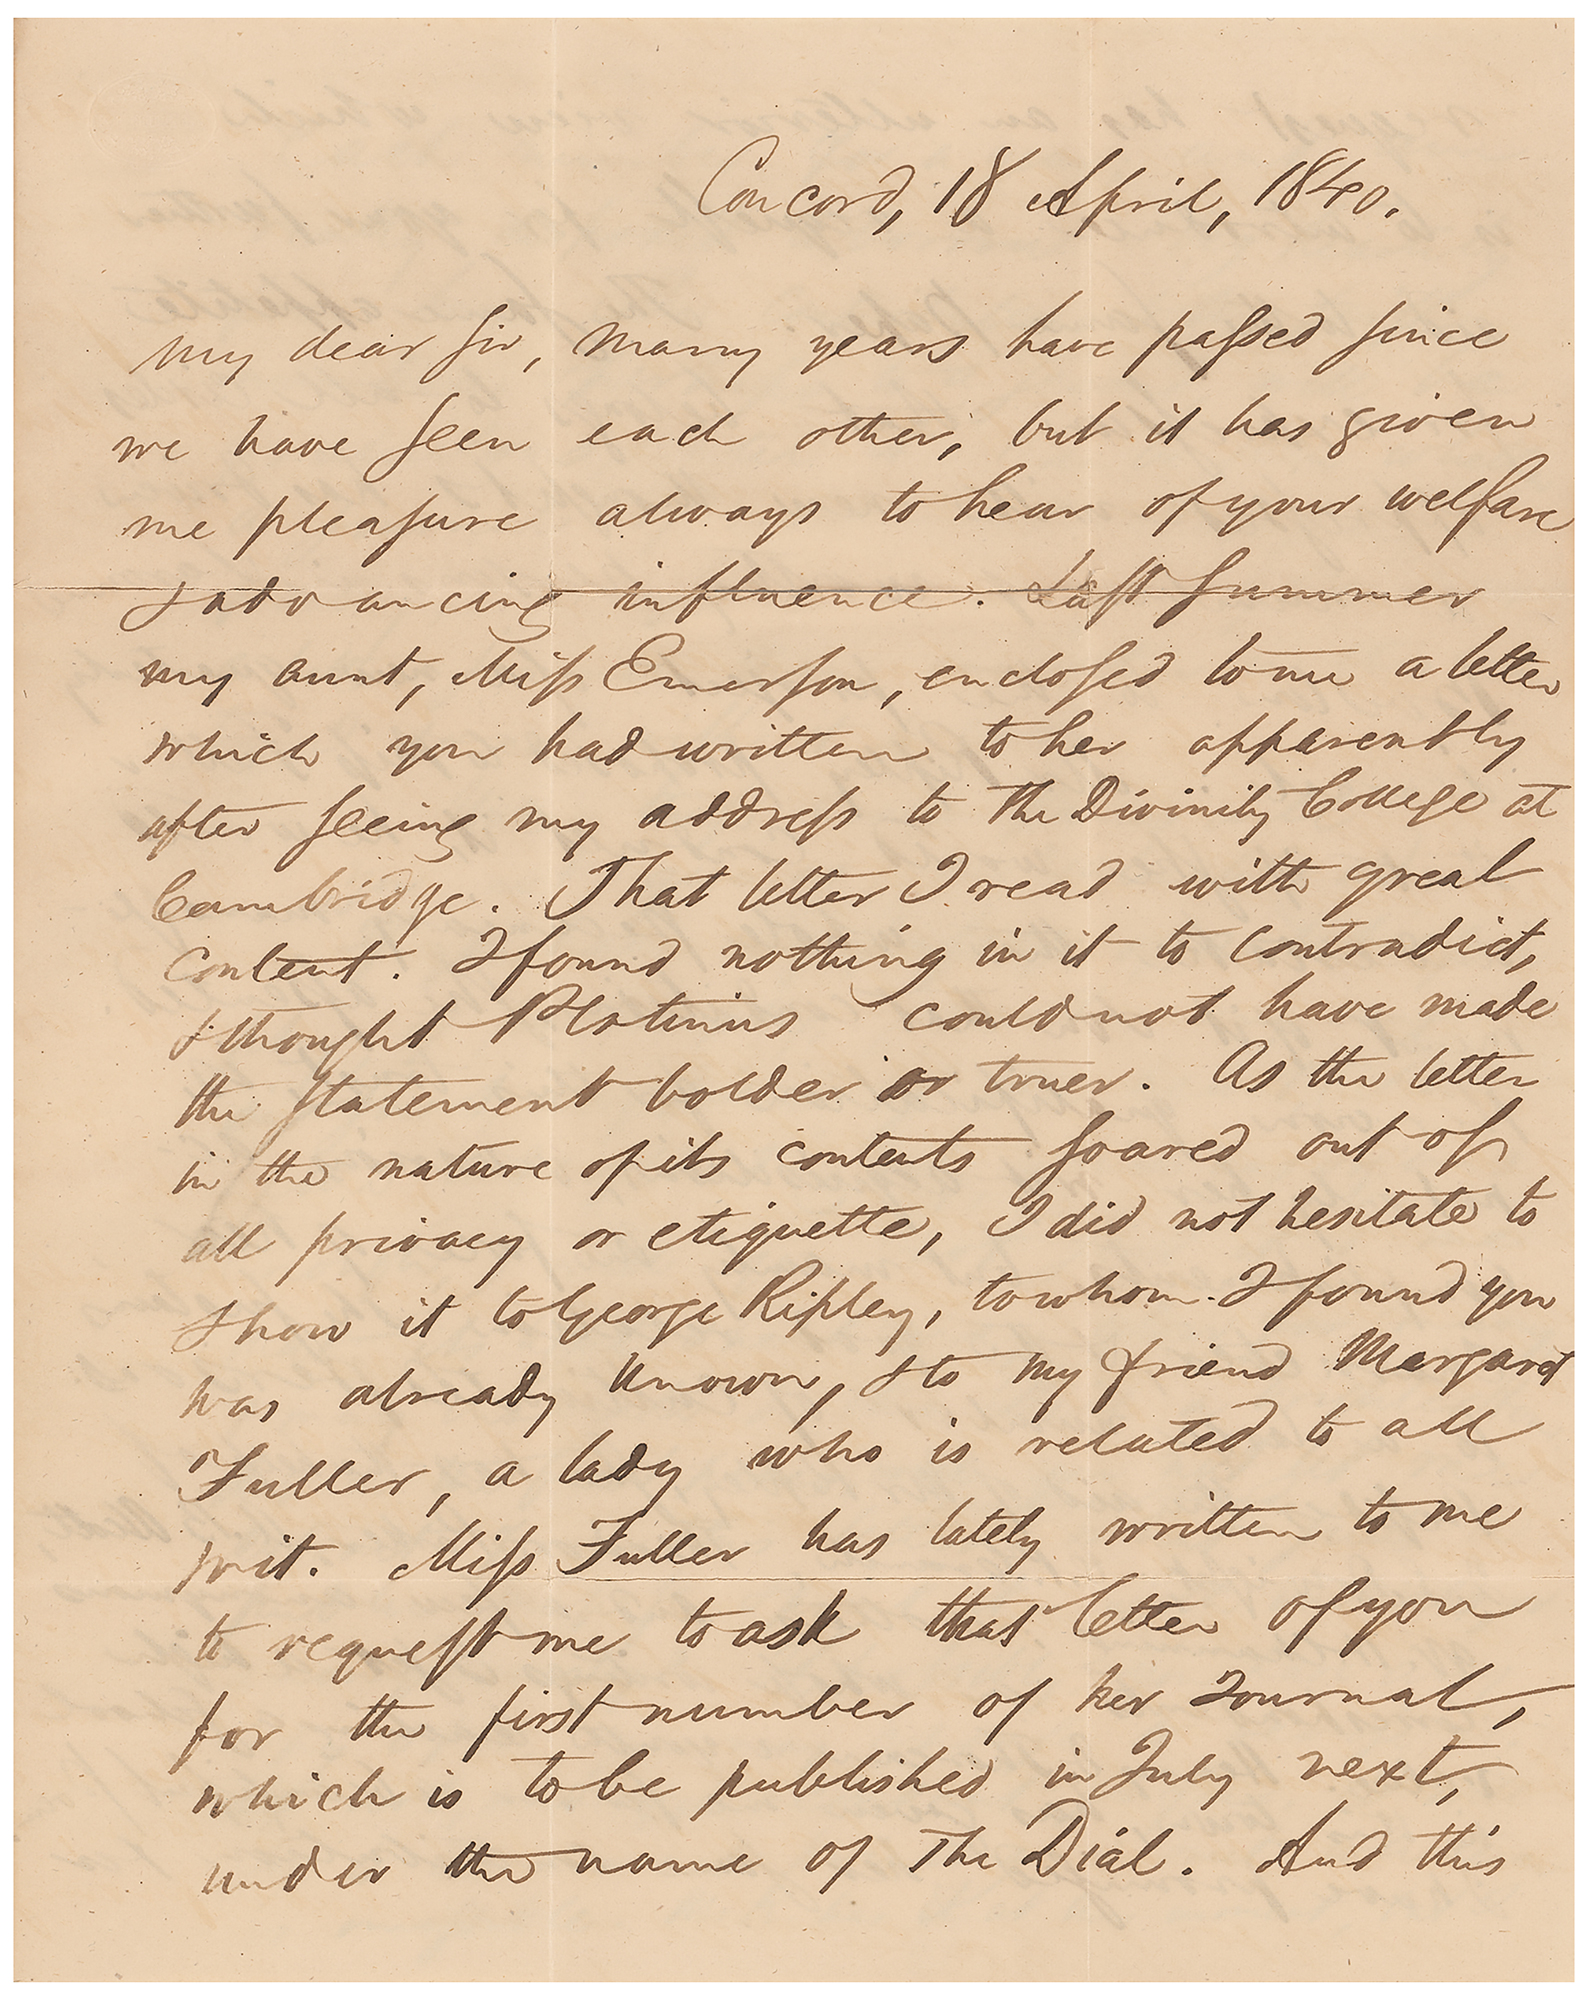 Ralph Waldo Emerson Handwritten Letter Sold For 24 935 Rr Auction